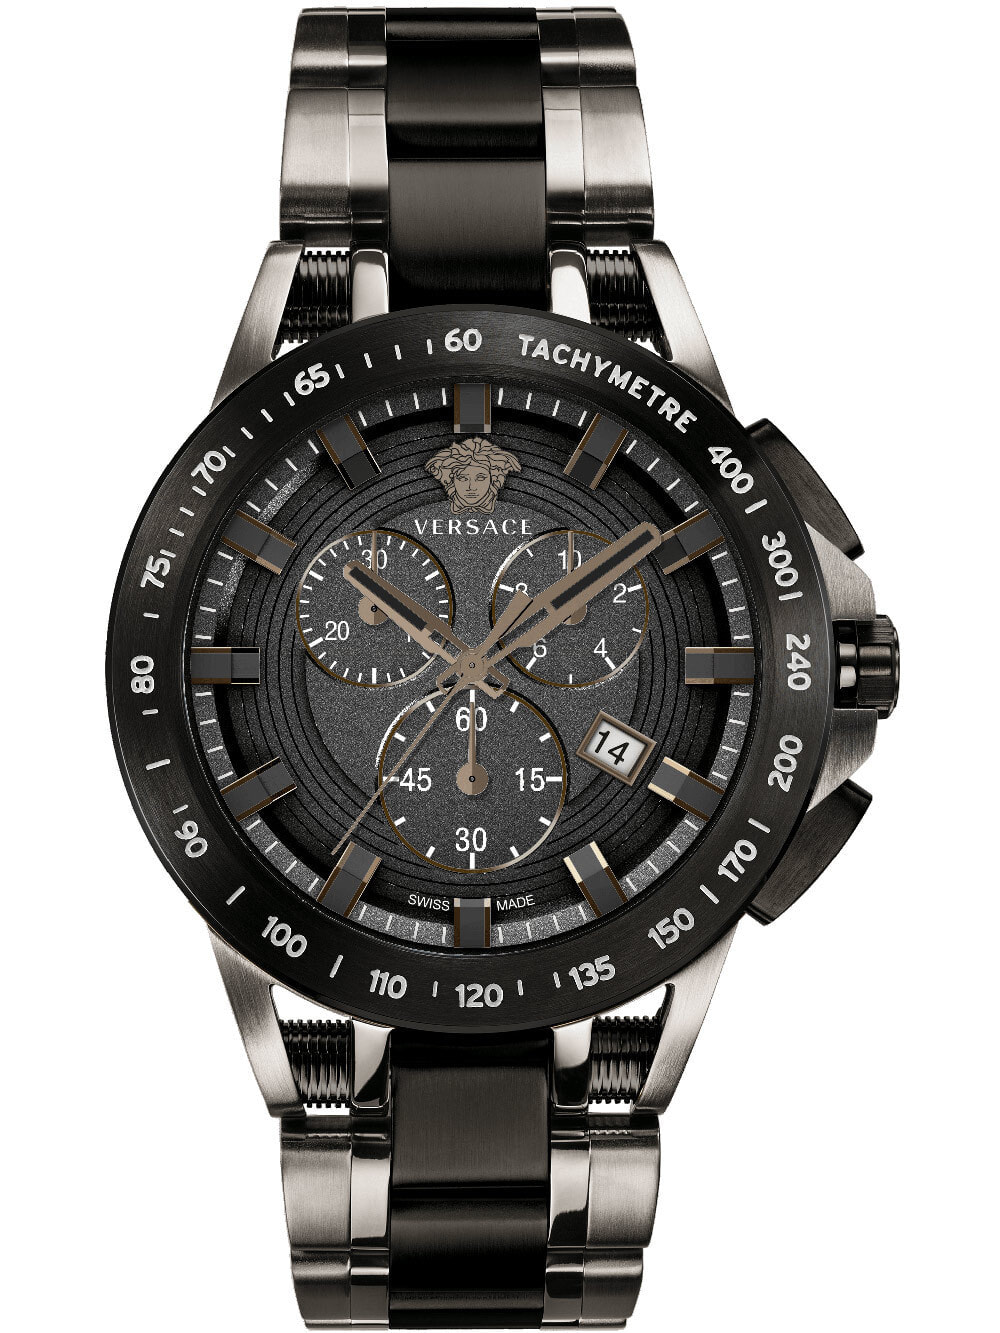 Мужские наручные часы с черным браслетом Versace VE3E00921 New Sport Tech Chronograph 45mm 10ATM